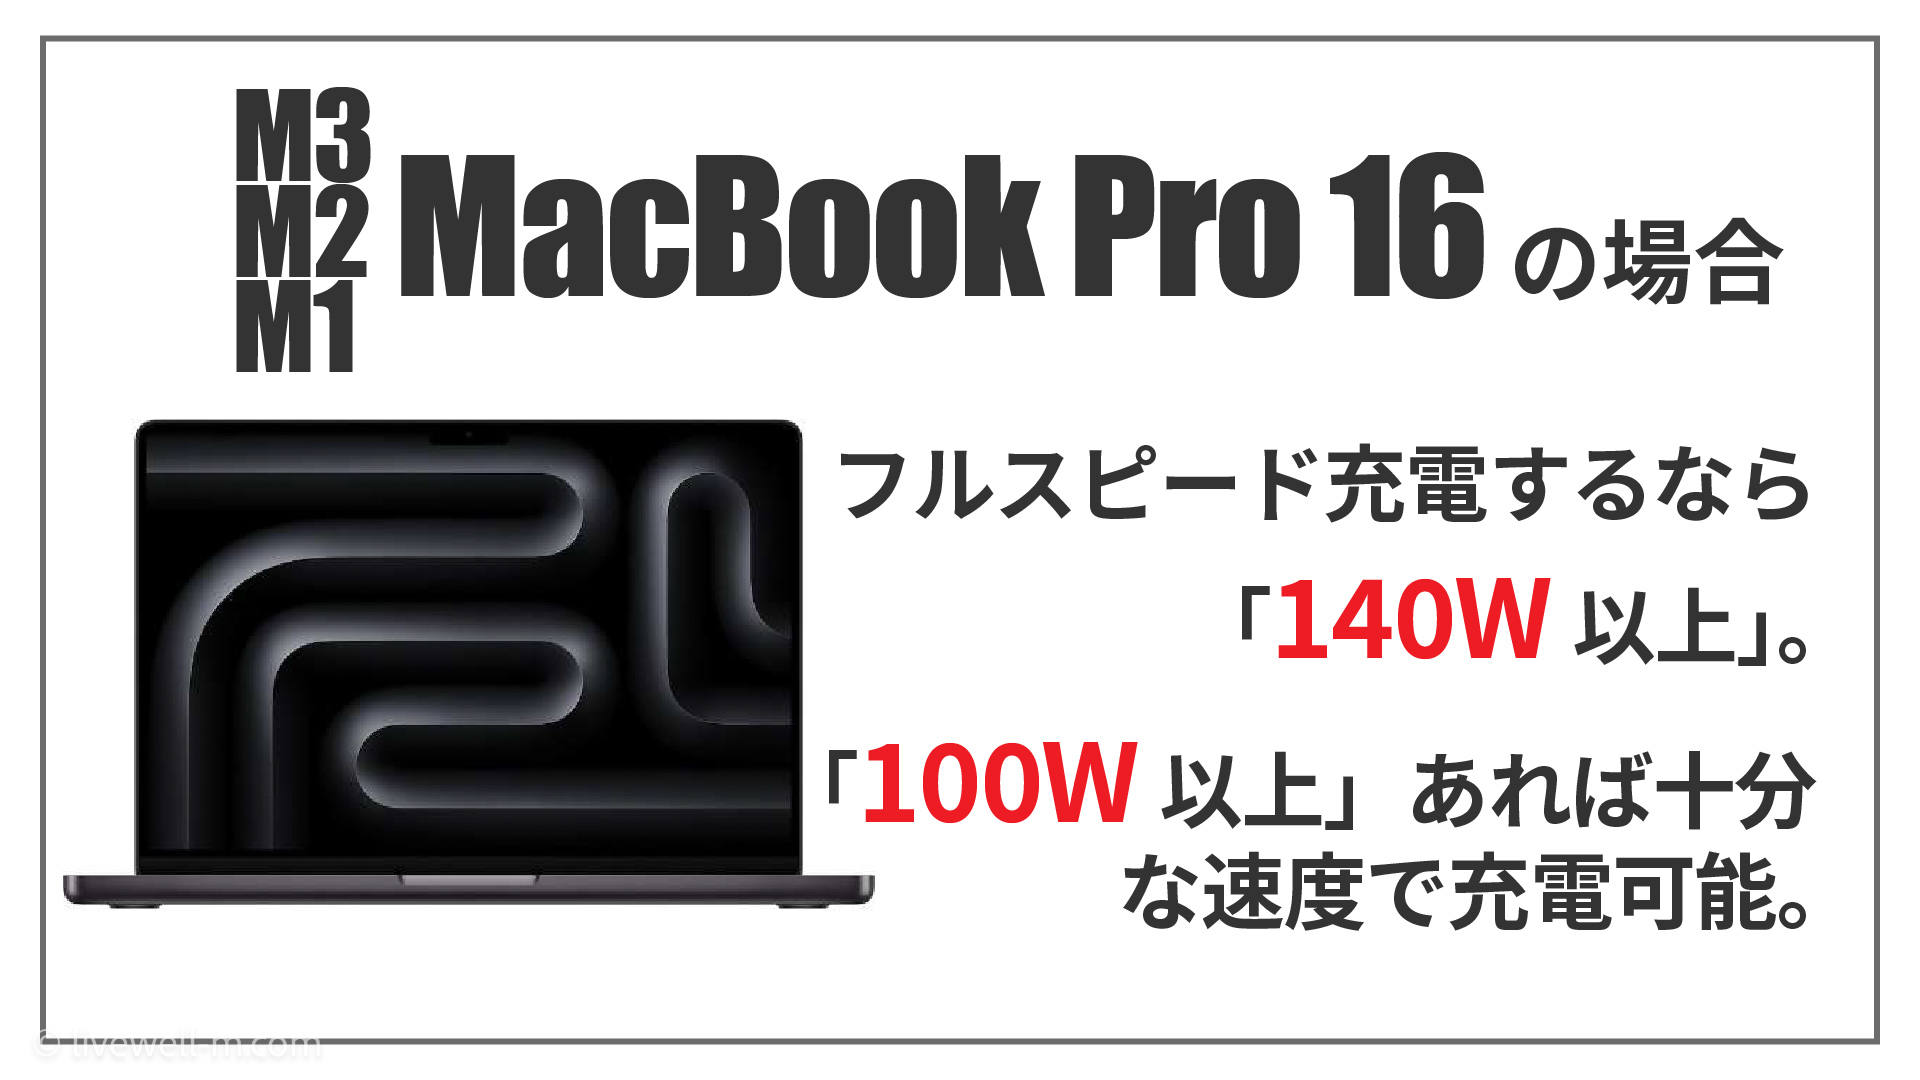 M3/M2/M1 MacBook Pro 16インチの場合